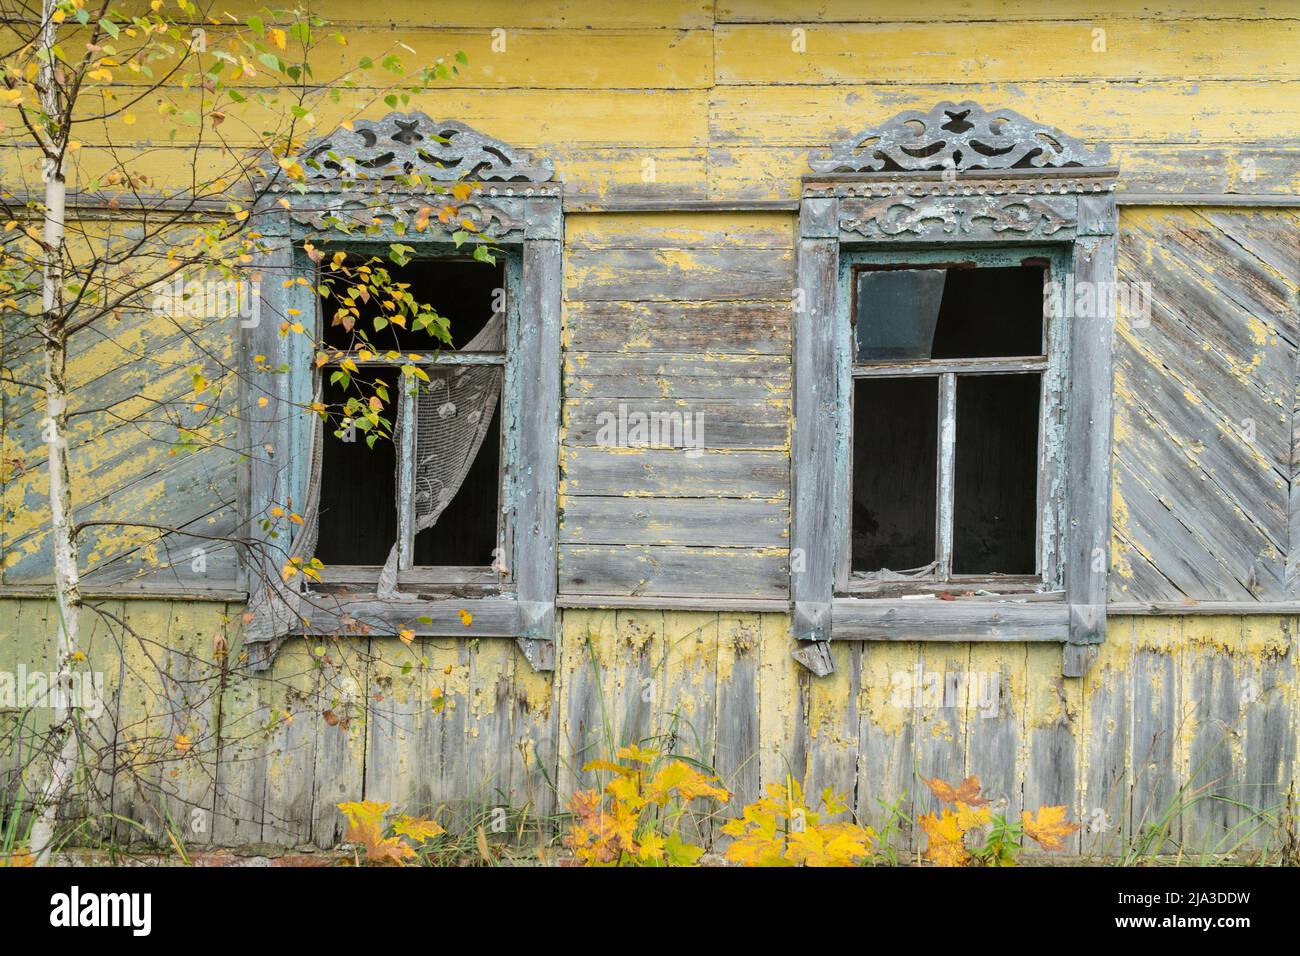 Carved wooden windows in old wooden houses in Oleshnia village, Chernihiv region, Ukraine. Ukrainian culture heritage Stock Photo